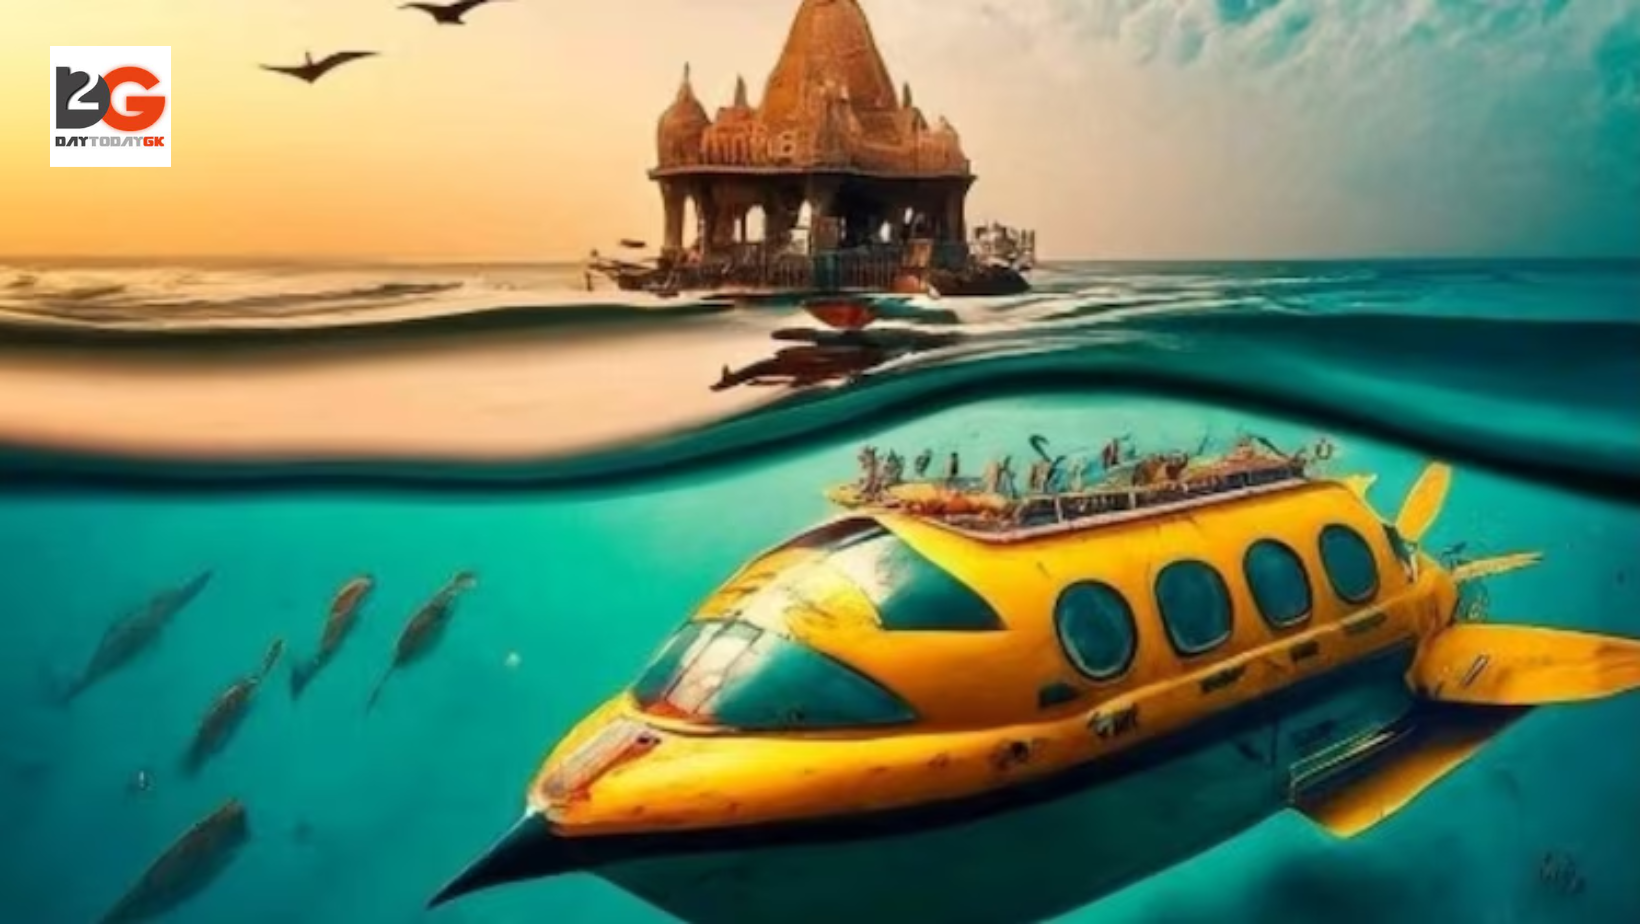 Gujarat will open India’s first submarine tourism site in Dwarka